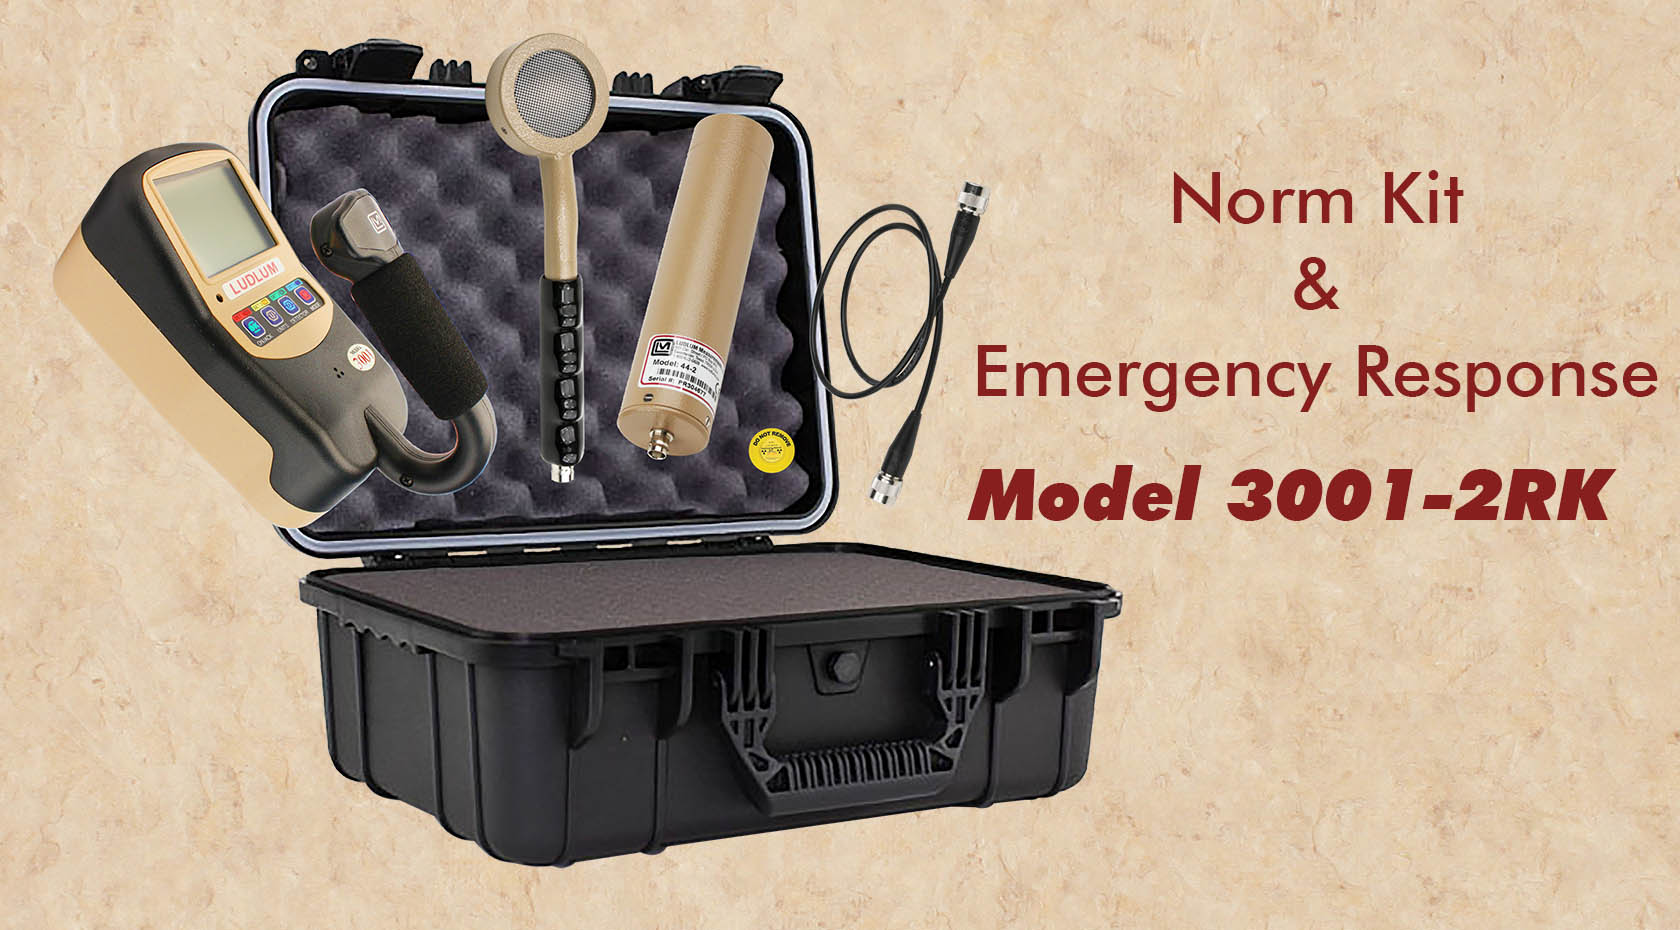 Ludlum Norm Kit and emergency response model 3001-2RK